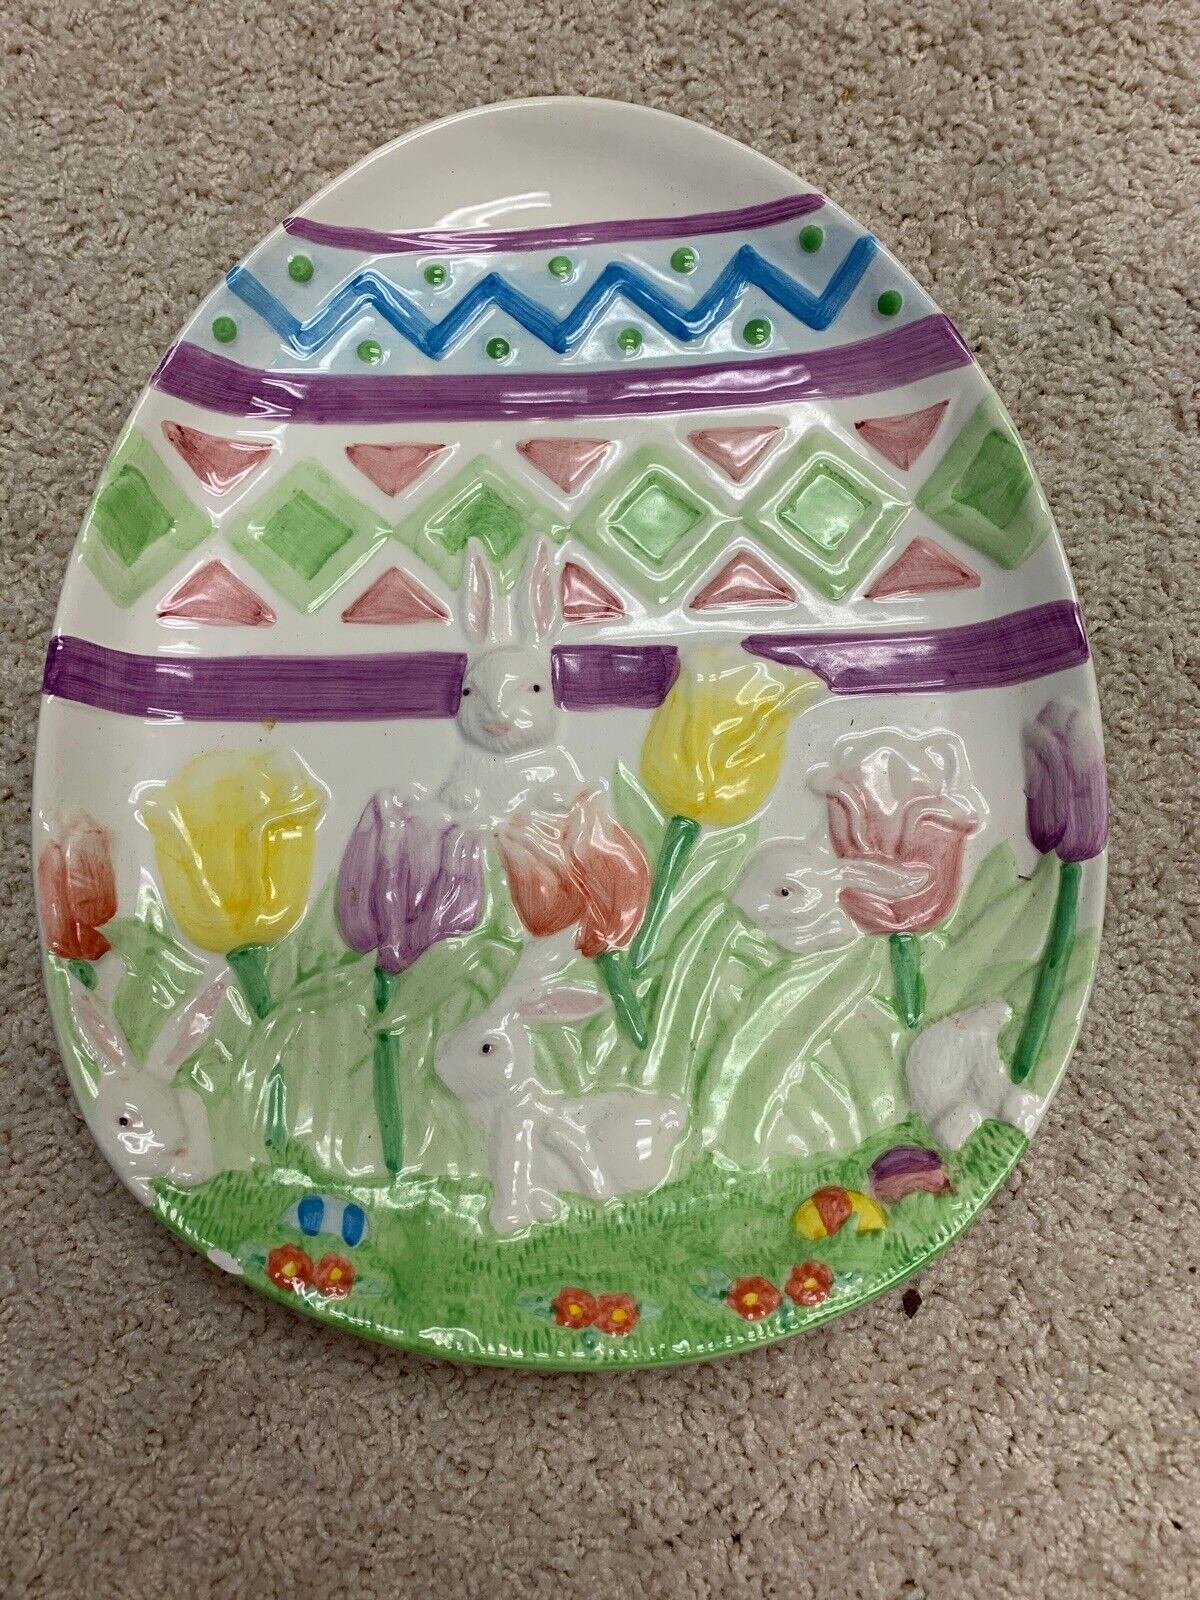 Inspirado Seattle Easter Ceramic Bunny Rabbit Egg Plate Bunny Garden Pastel 1995